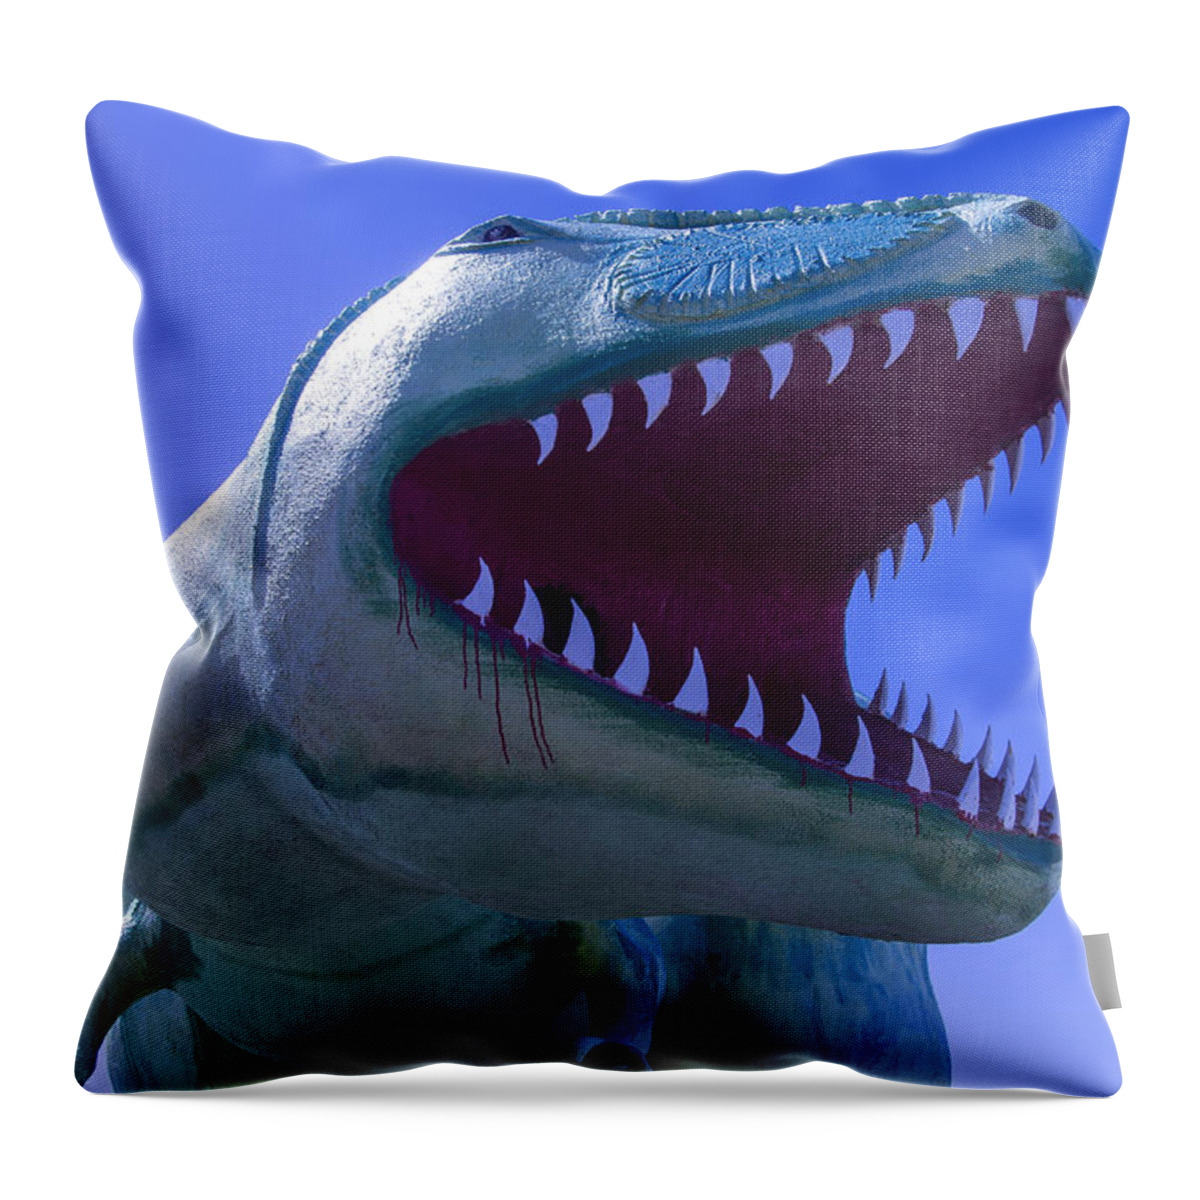 Roadside Dinosaur Throw Pillow featuring the photograph Trex Dinosaur by Garry Gay